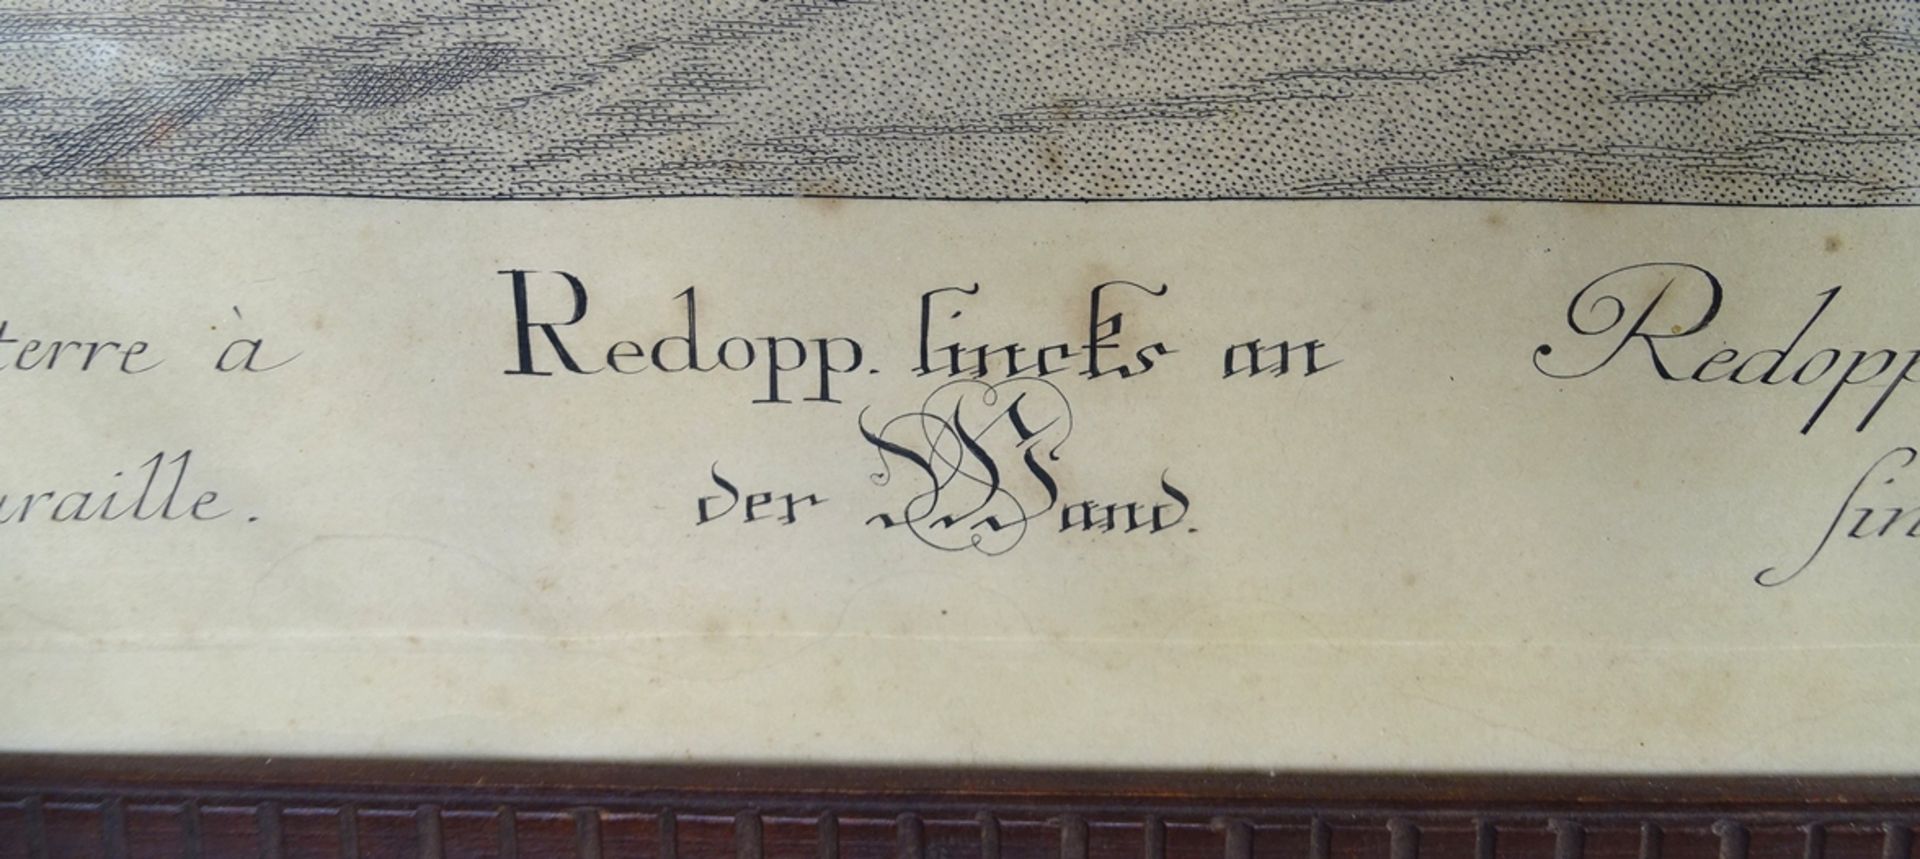 Kupferstich nach Johann Elias Ridinger, Redopp.links an der Wand, Stockfleckig, ger/Glas, RG 49x64, - Image 4 of 8